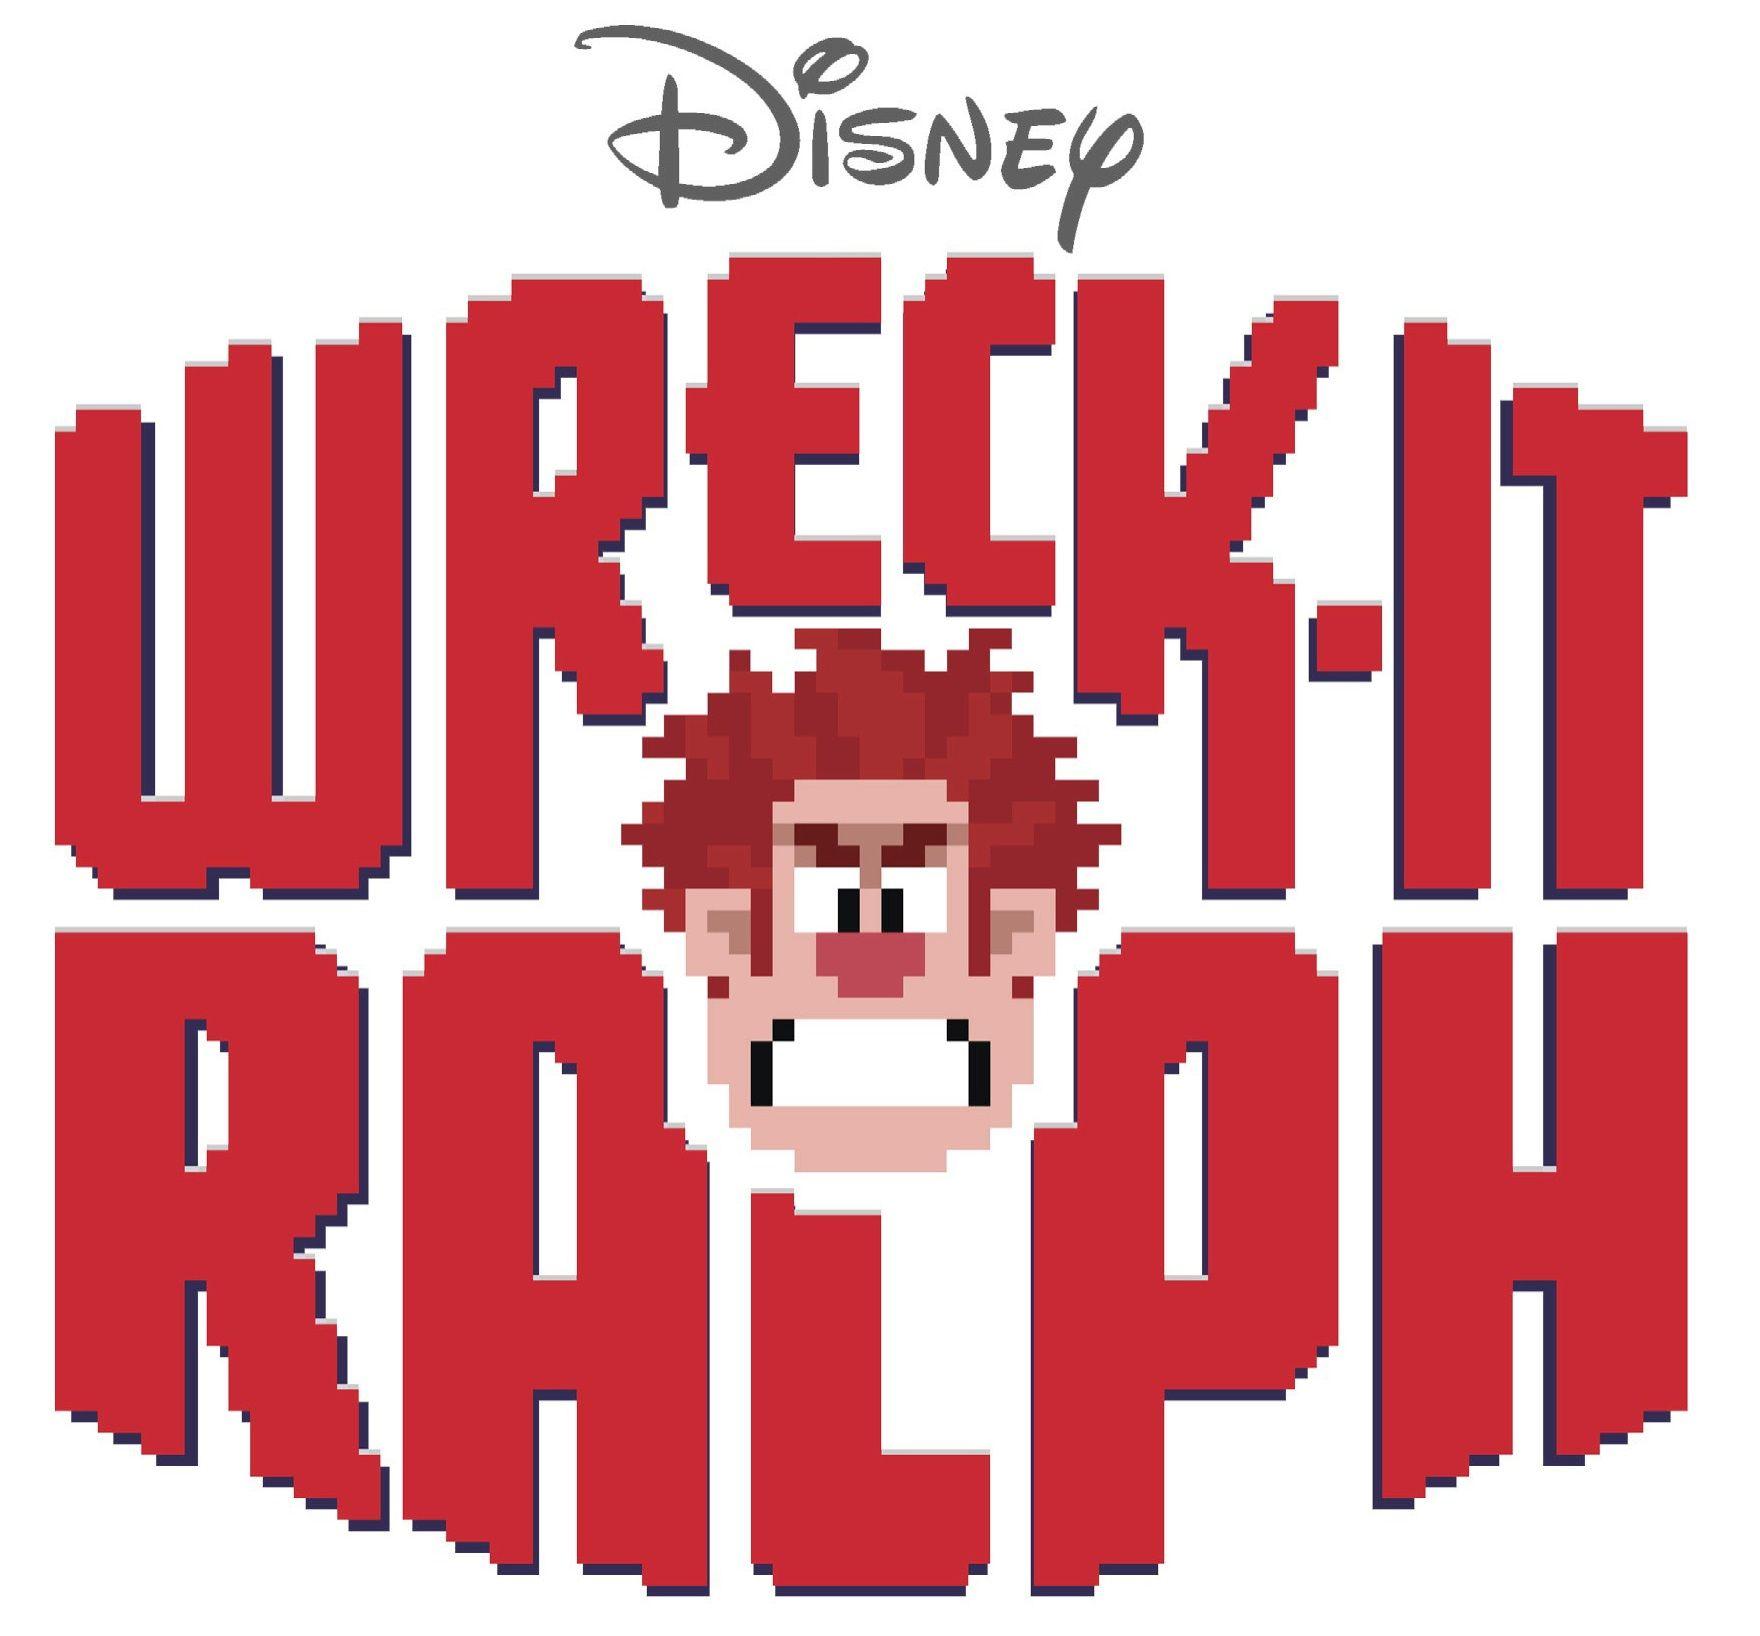 Wreck Logo - Wreck-It Ralph | Logopedia | FANDOM powered by Wikia